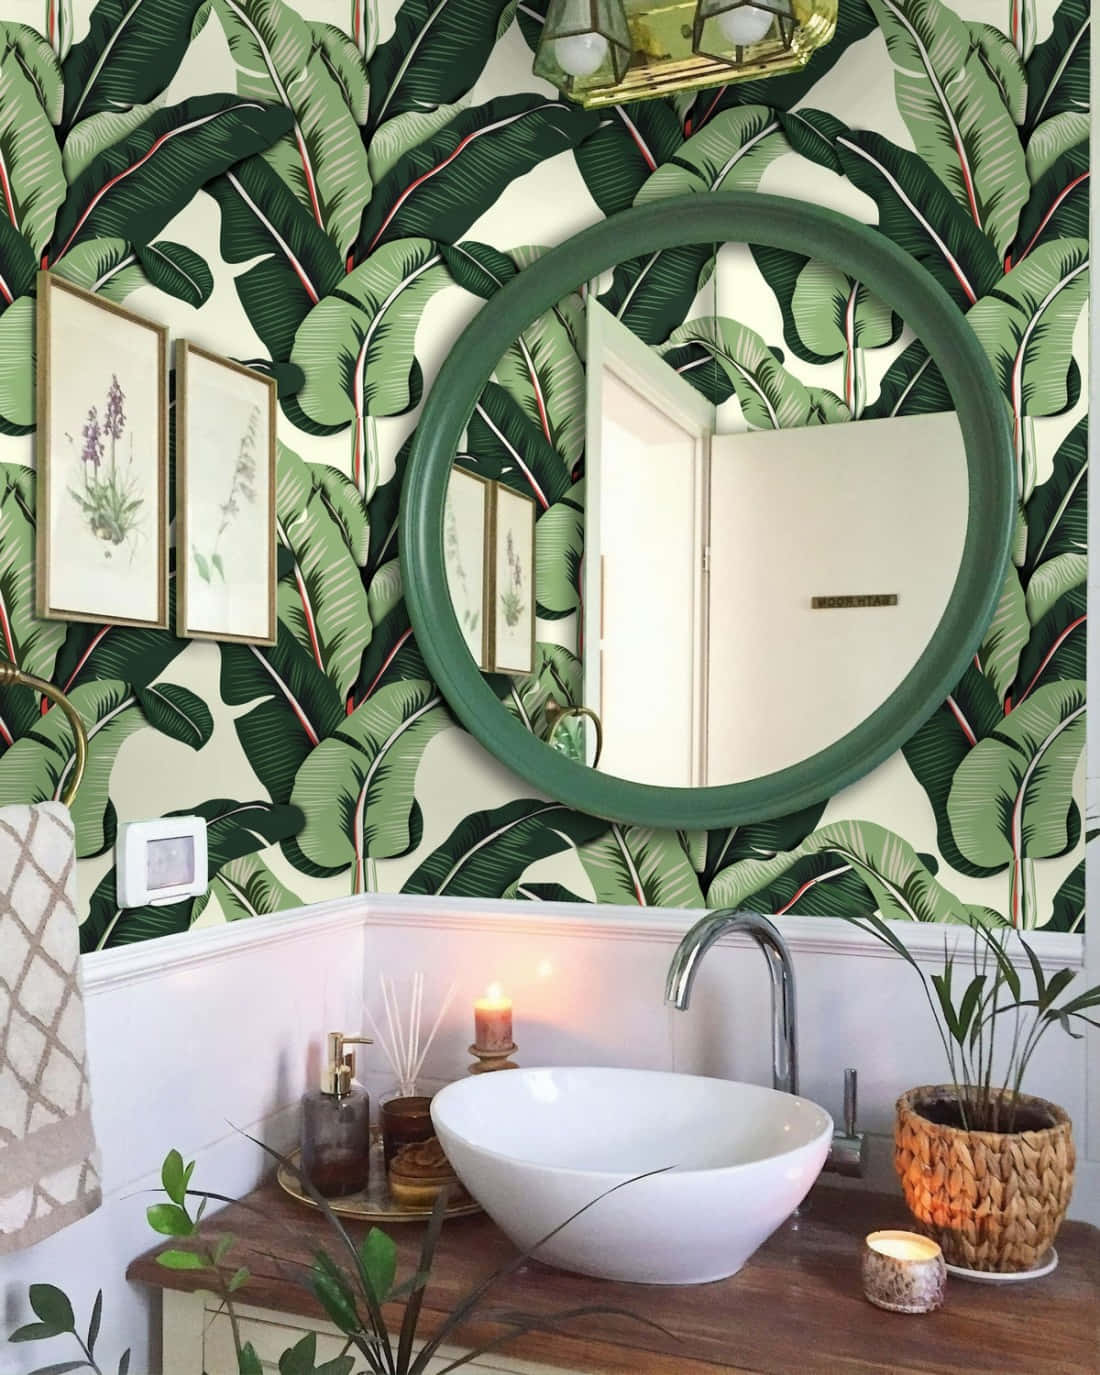 Caption: Refreshing Tropical Bathroom With Green Leafy Walls Wallpaper